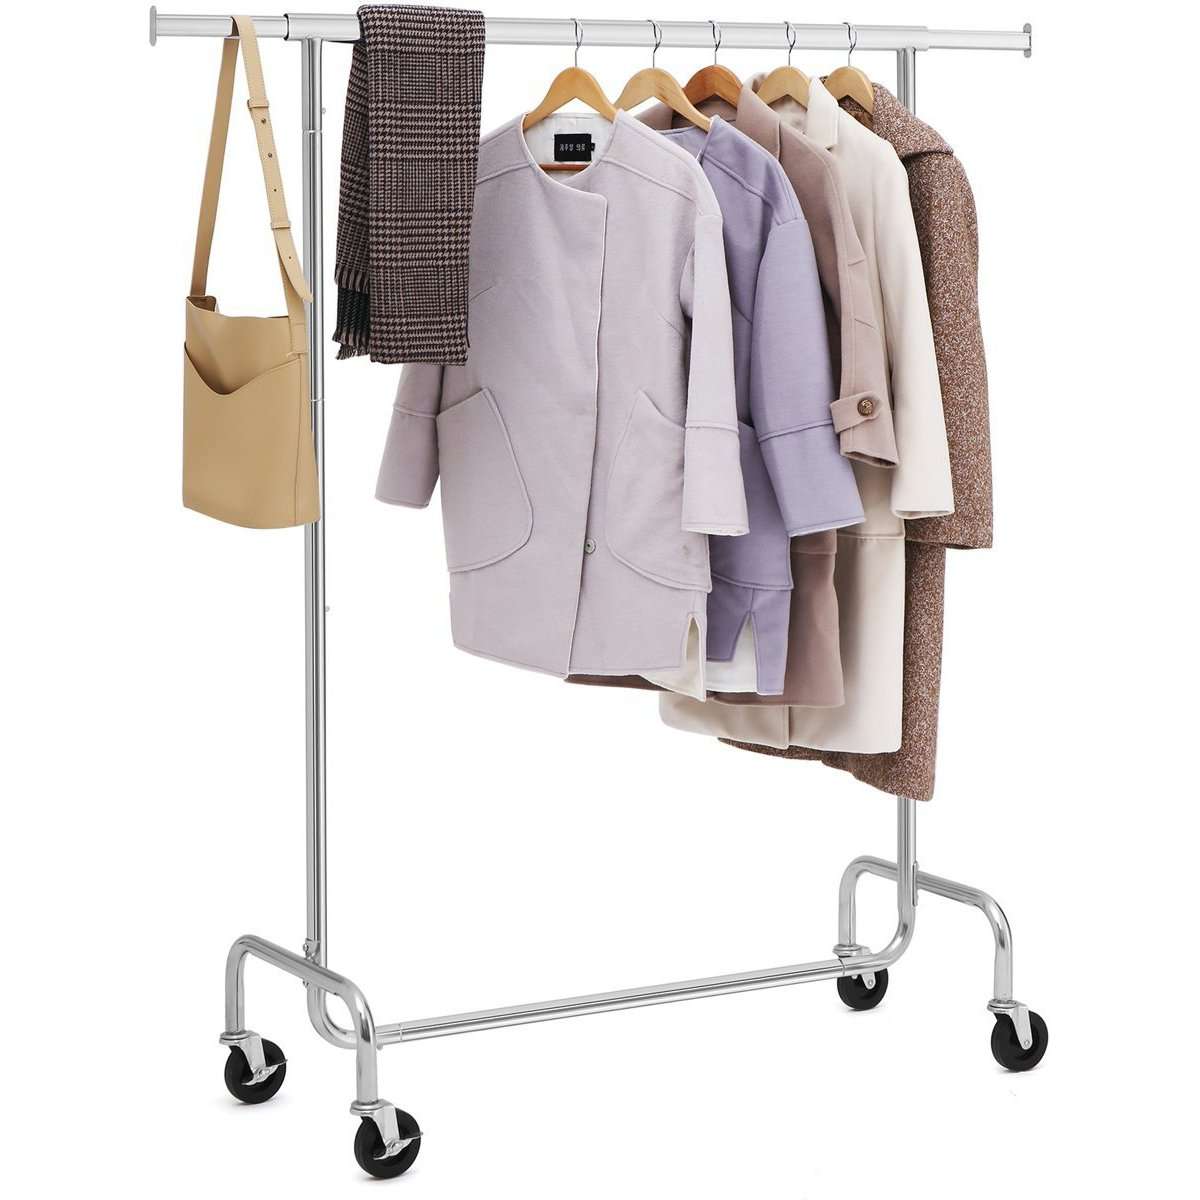 Nancy's Wardrobe Rack - Clothes Rack - Clothes Rack on Wheels - Adjustable Clothes Rack - Clothes Racks